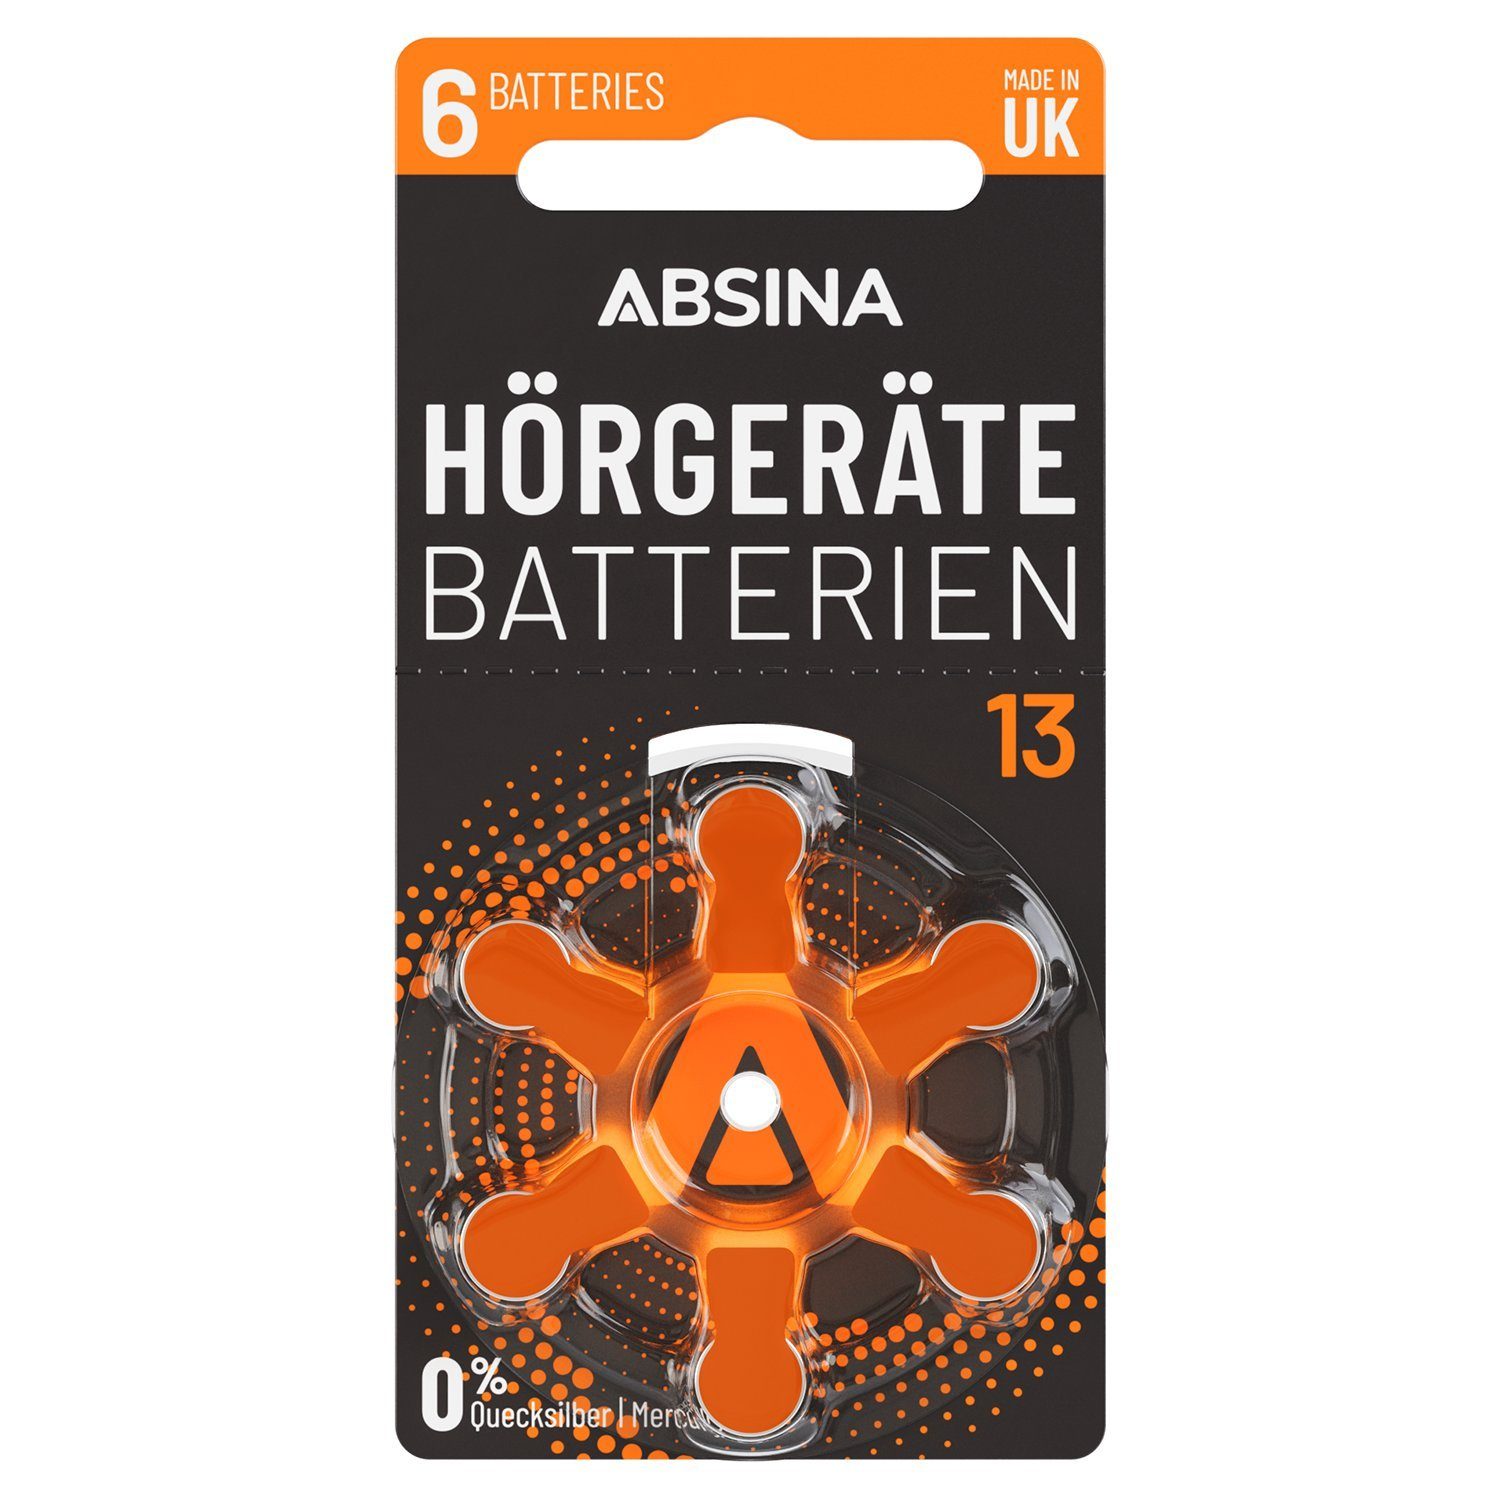 ABSINA (1 orange 13 - PR48 St) Hörgerätebatterien P13 Knopfzelle, Batterien ZL2 Hörgeräte 13 6x